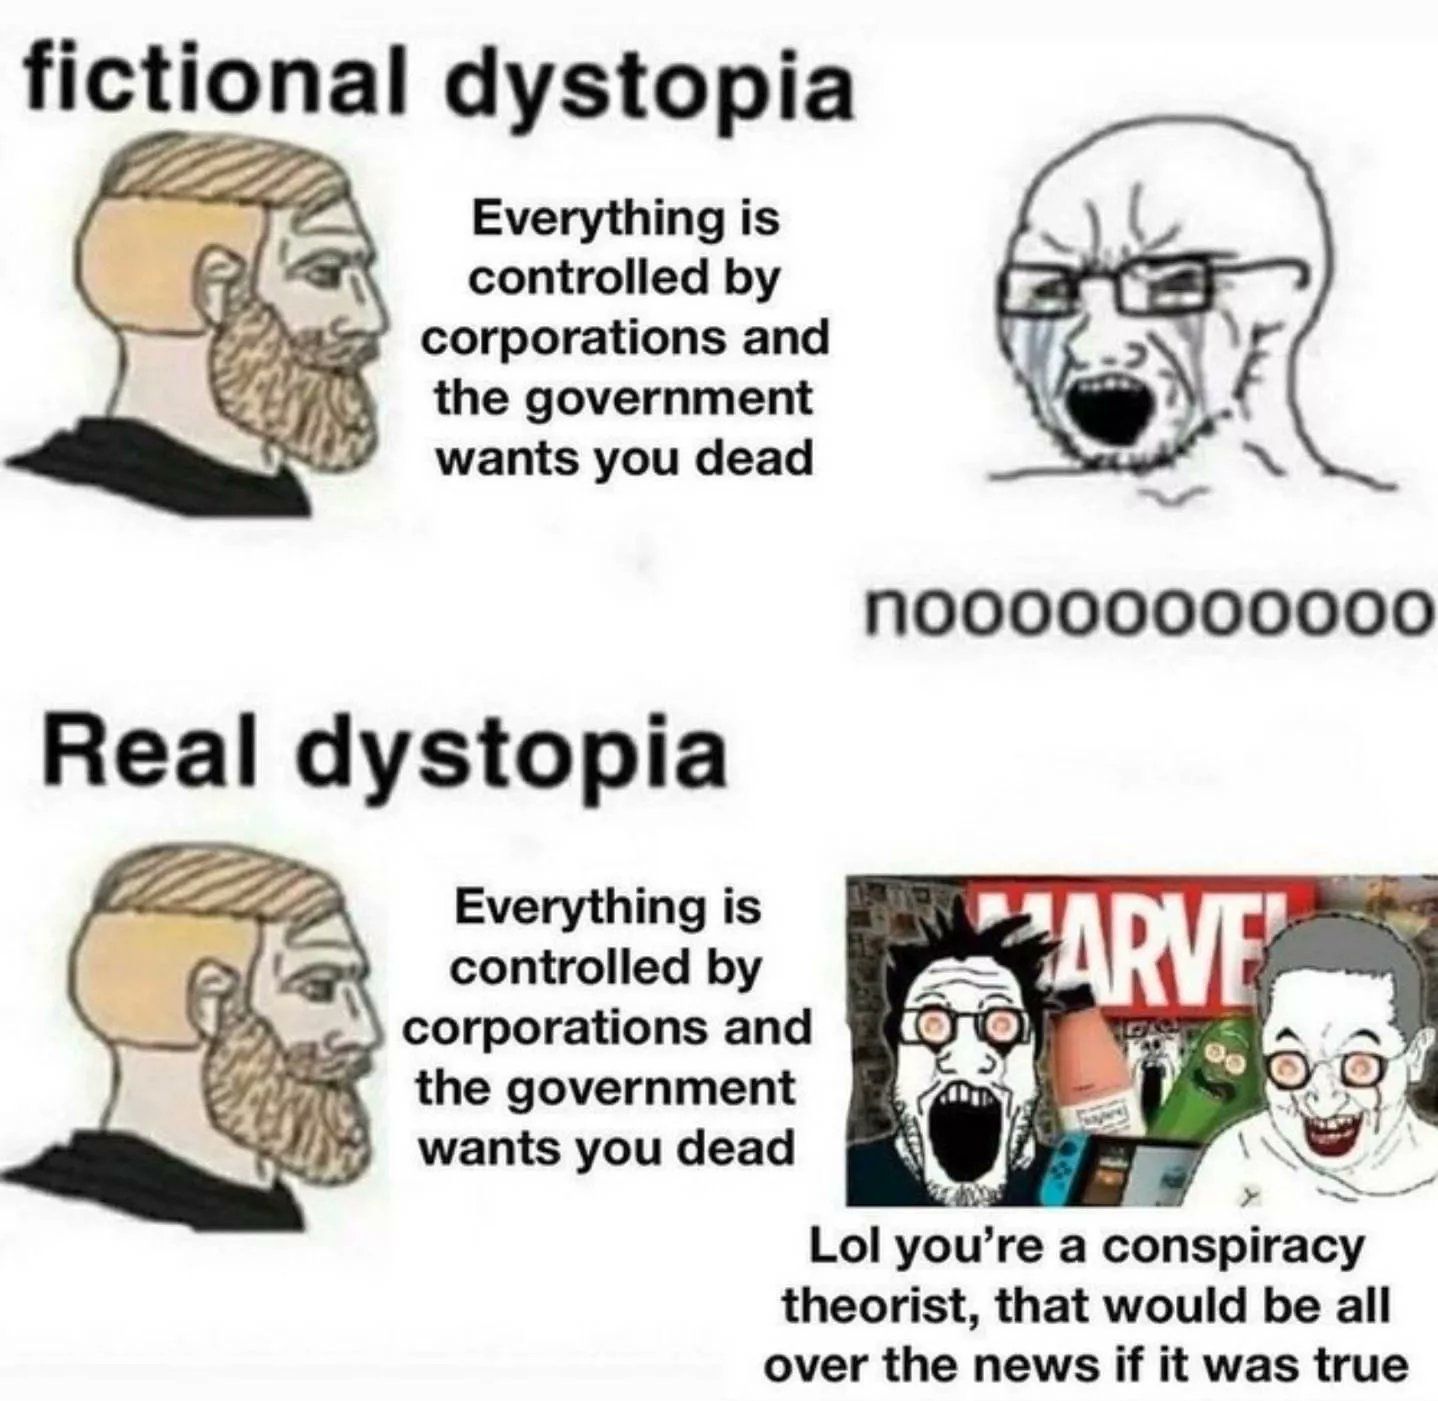 Dystopia